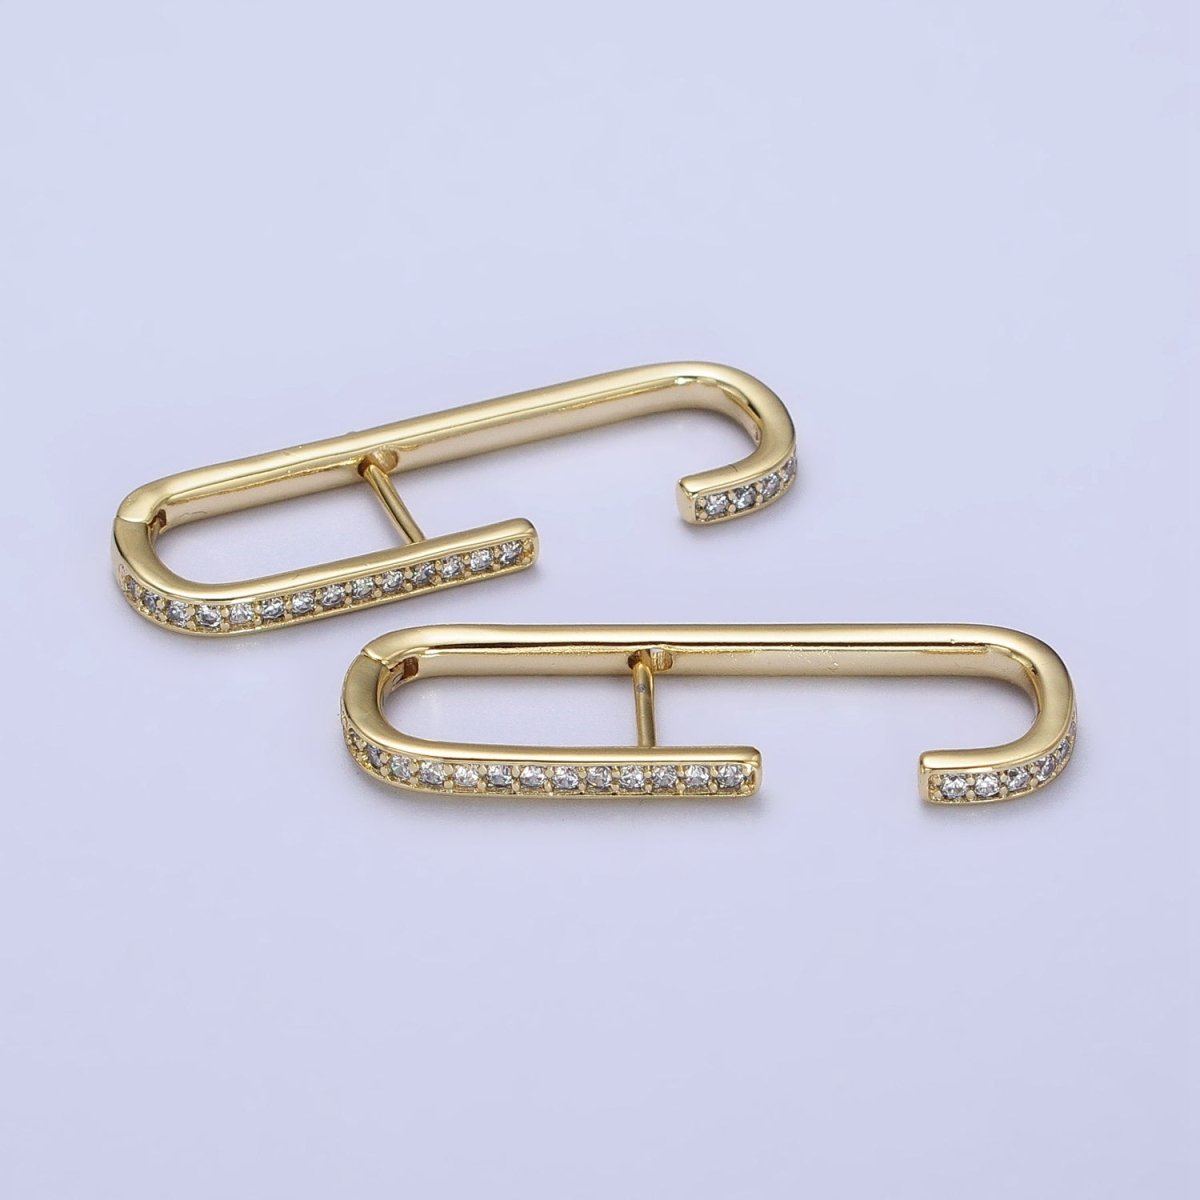 14K Gold Filled 32mm Micro Paved CZ Geometric C-Shaped English Lock Earrings | AB253 - DLUXCA